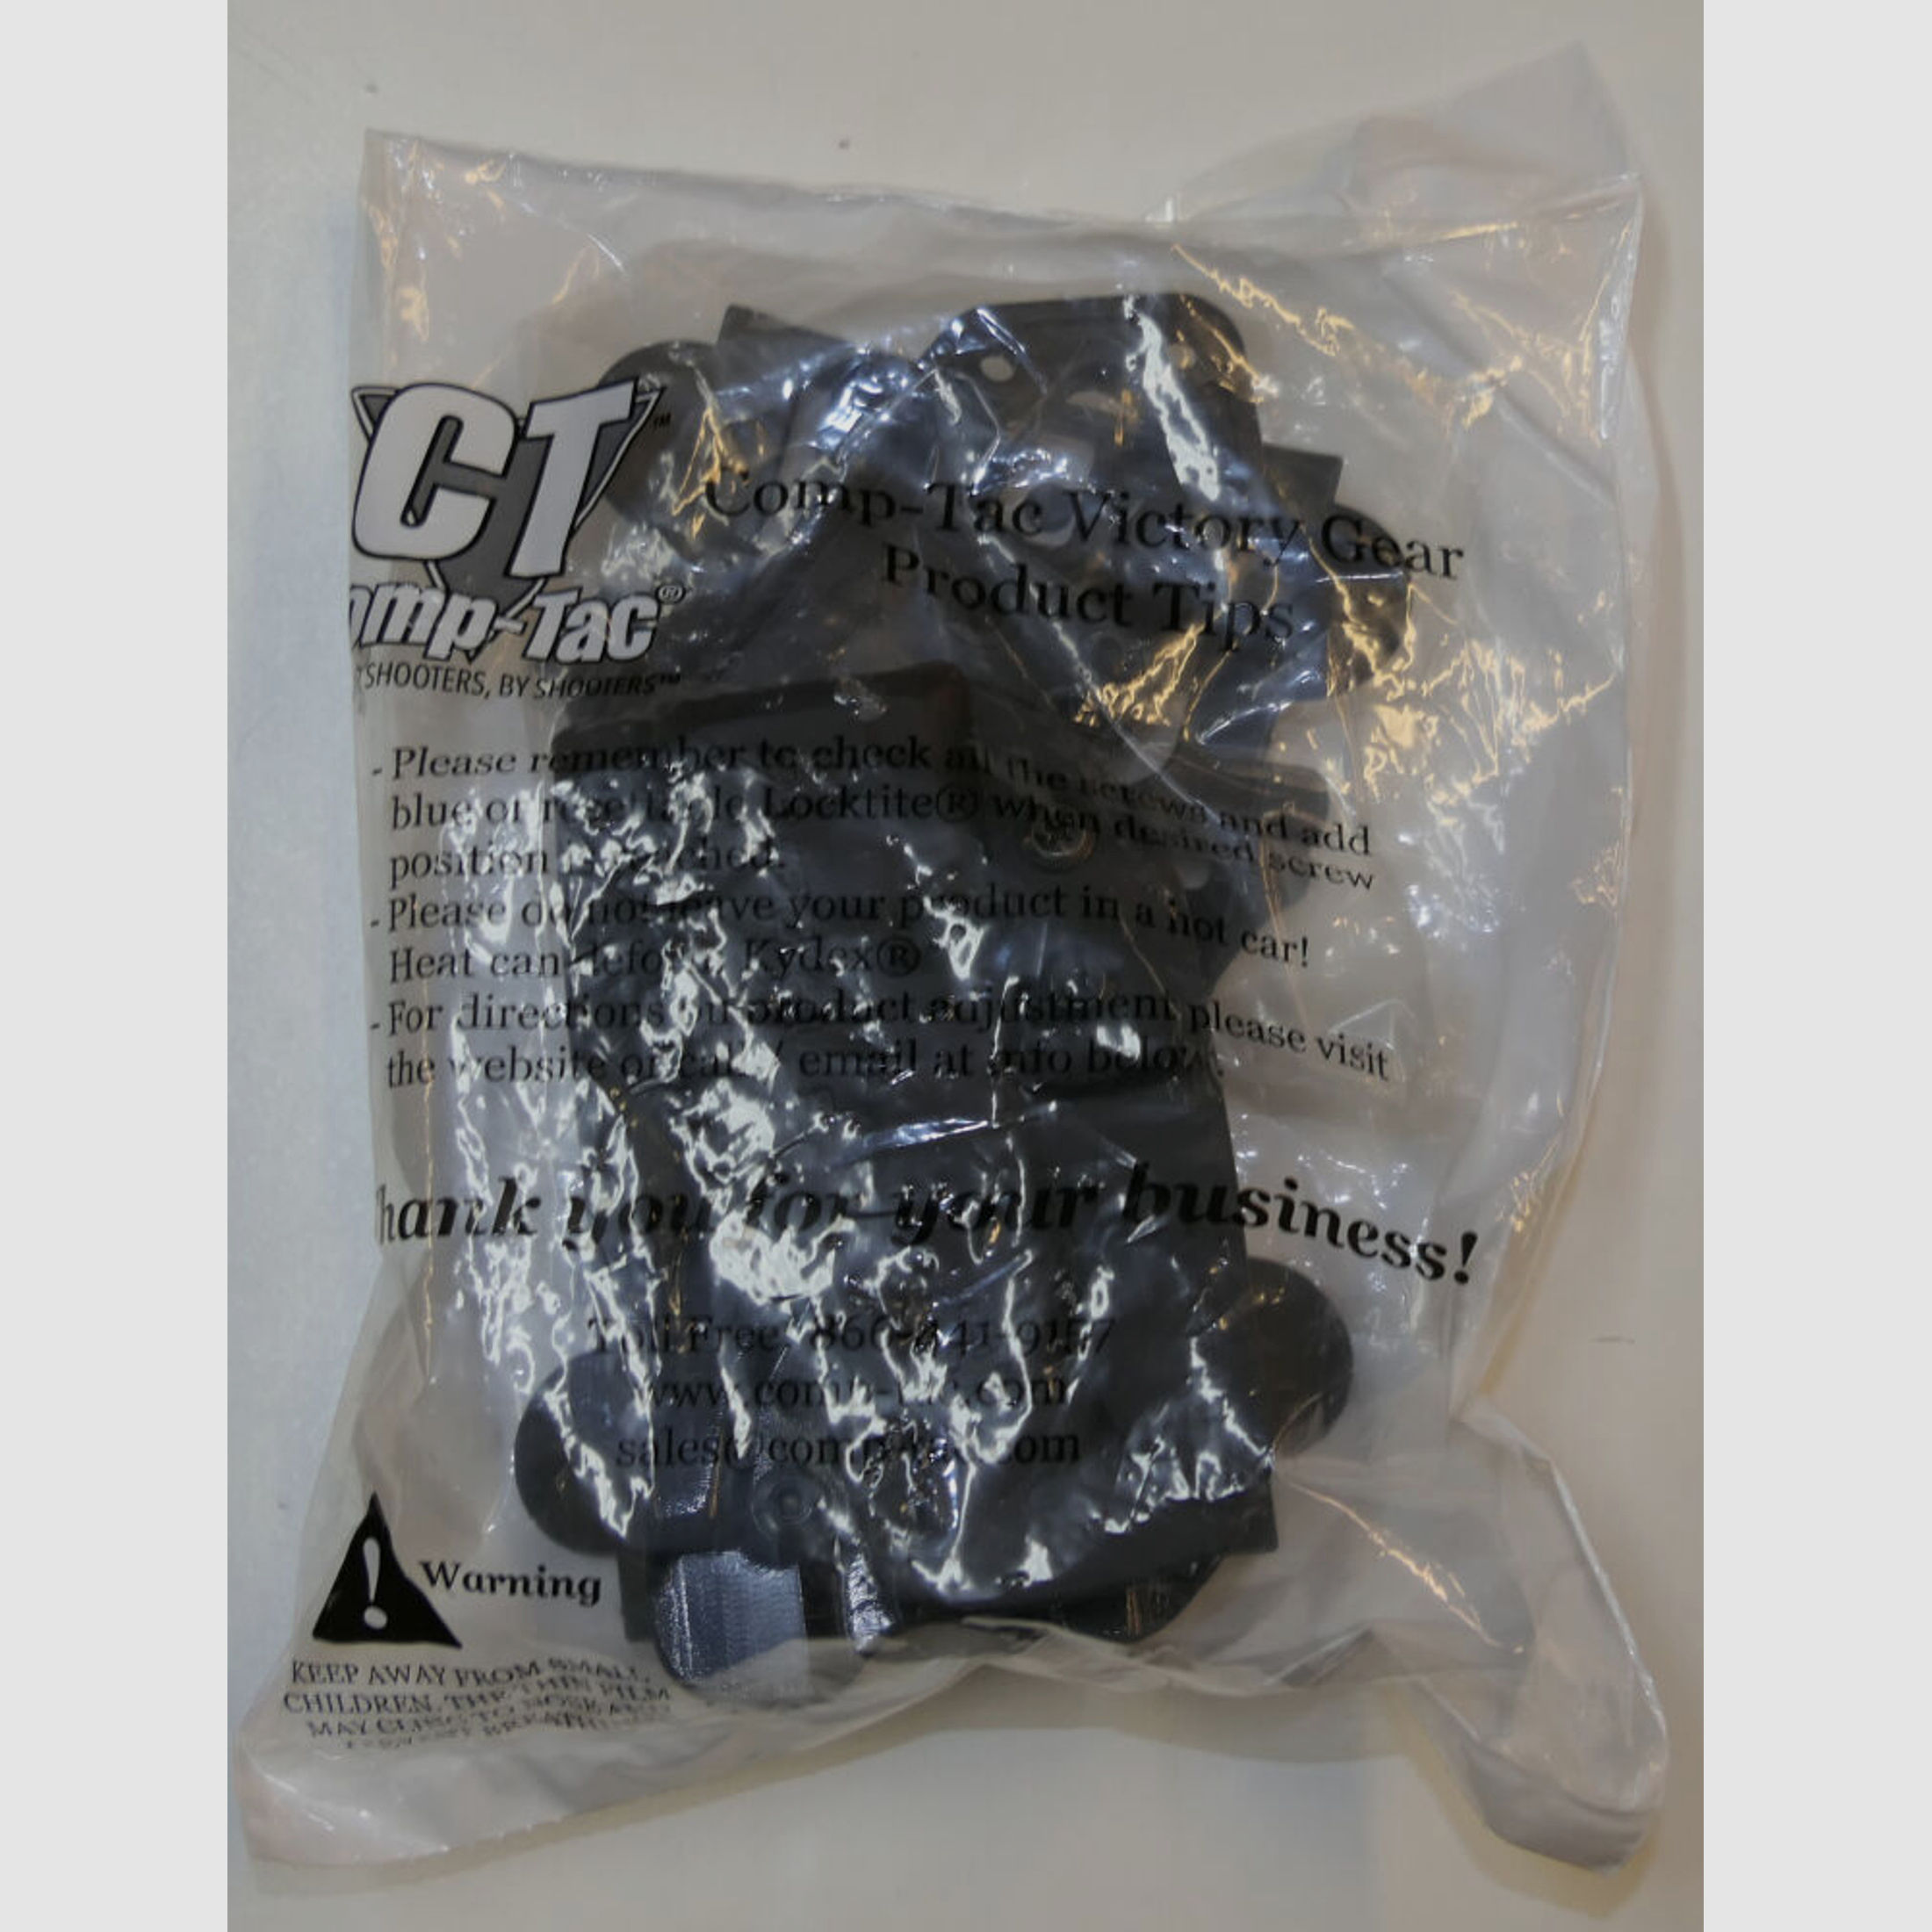 Comp-Tac	 Glock 19/23/33 COMP-TAC International KYDEX Holster rechts schwarz